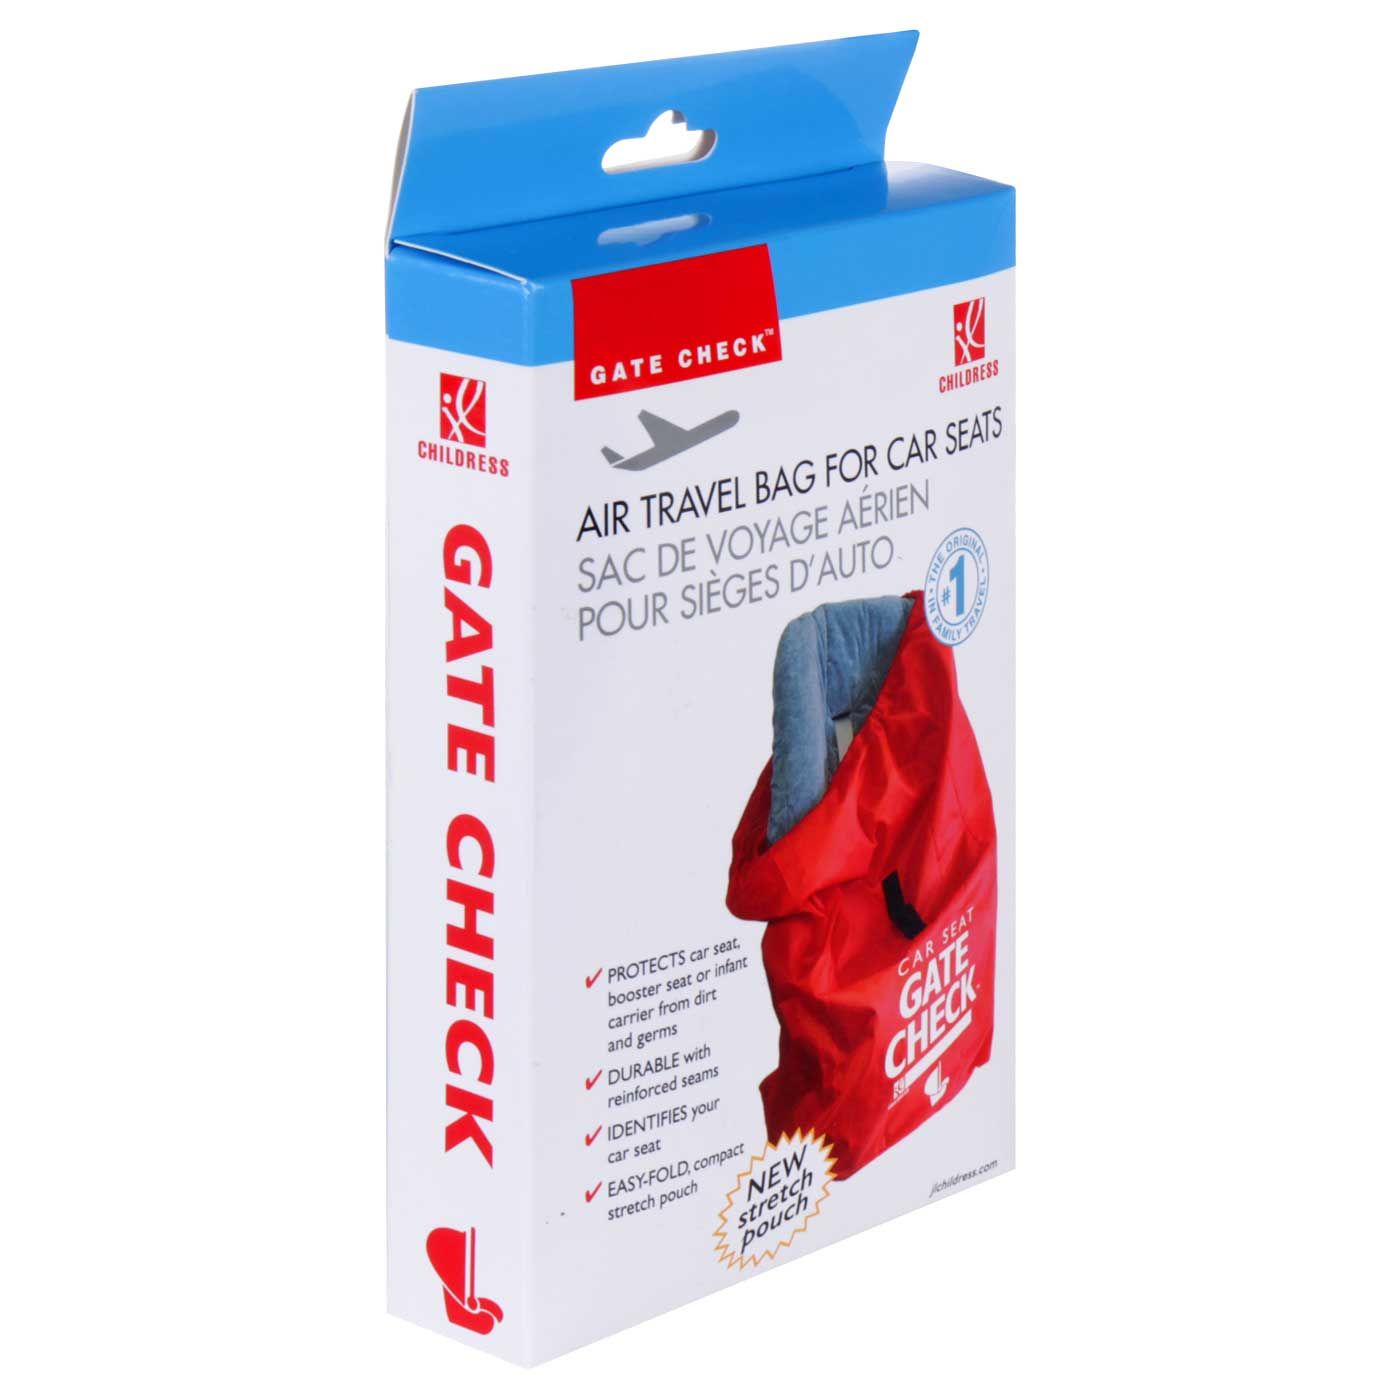 JL Childress Gate Check Bag Gate Check Bag for Car Seats - 3